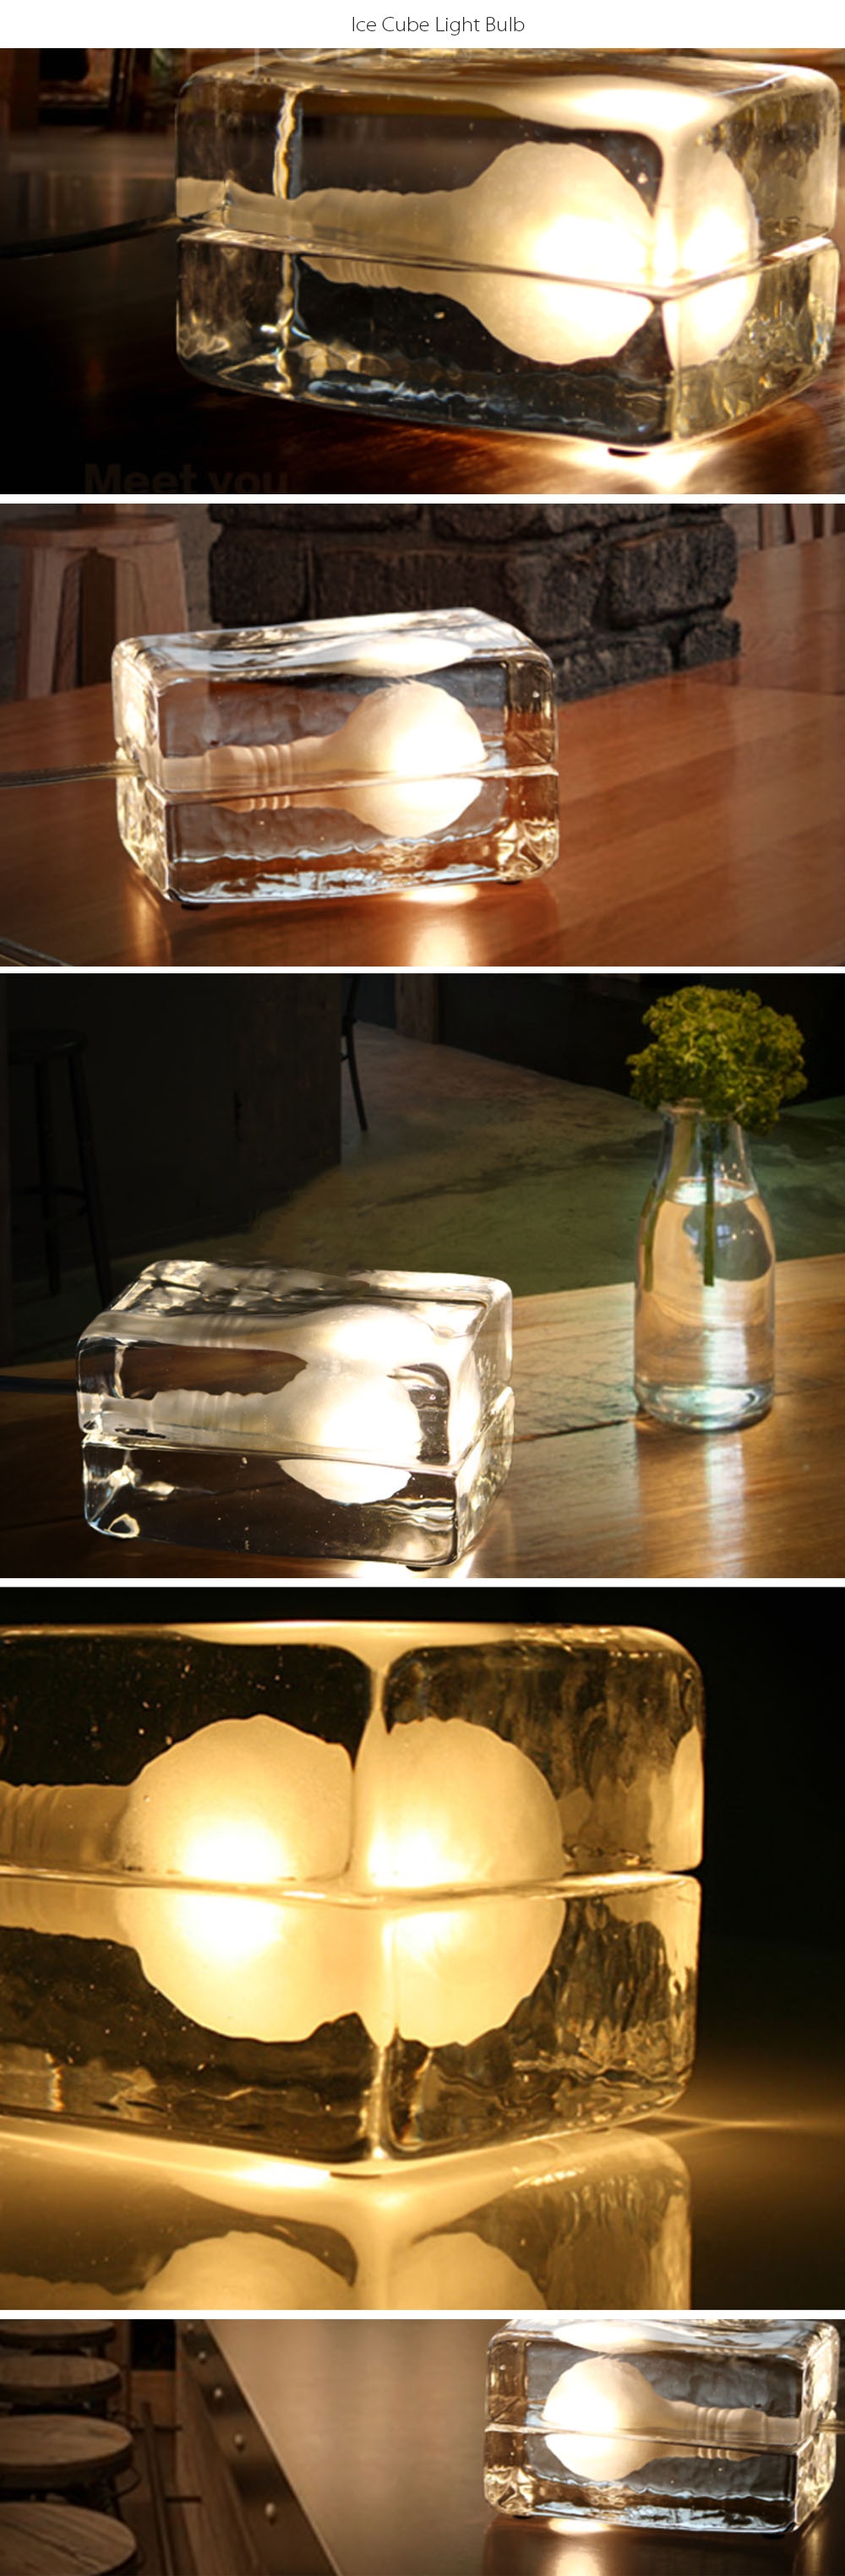 Household Cylinder Ice Cube Mold Whiskey Ice Cube Light Bulbs Ice